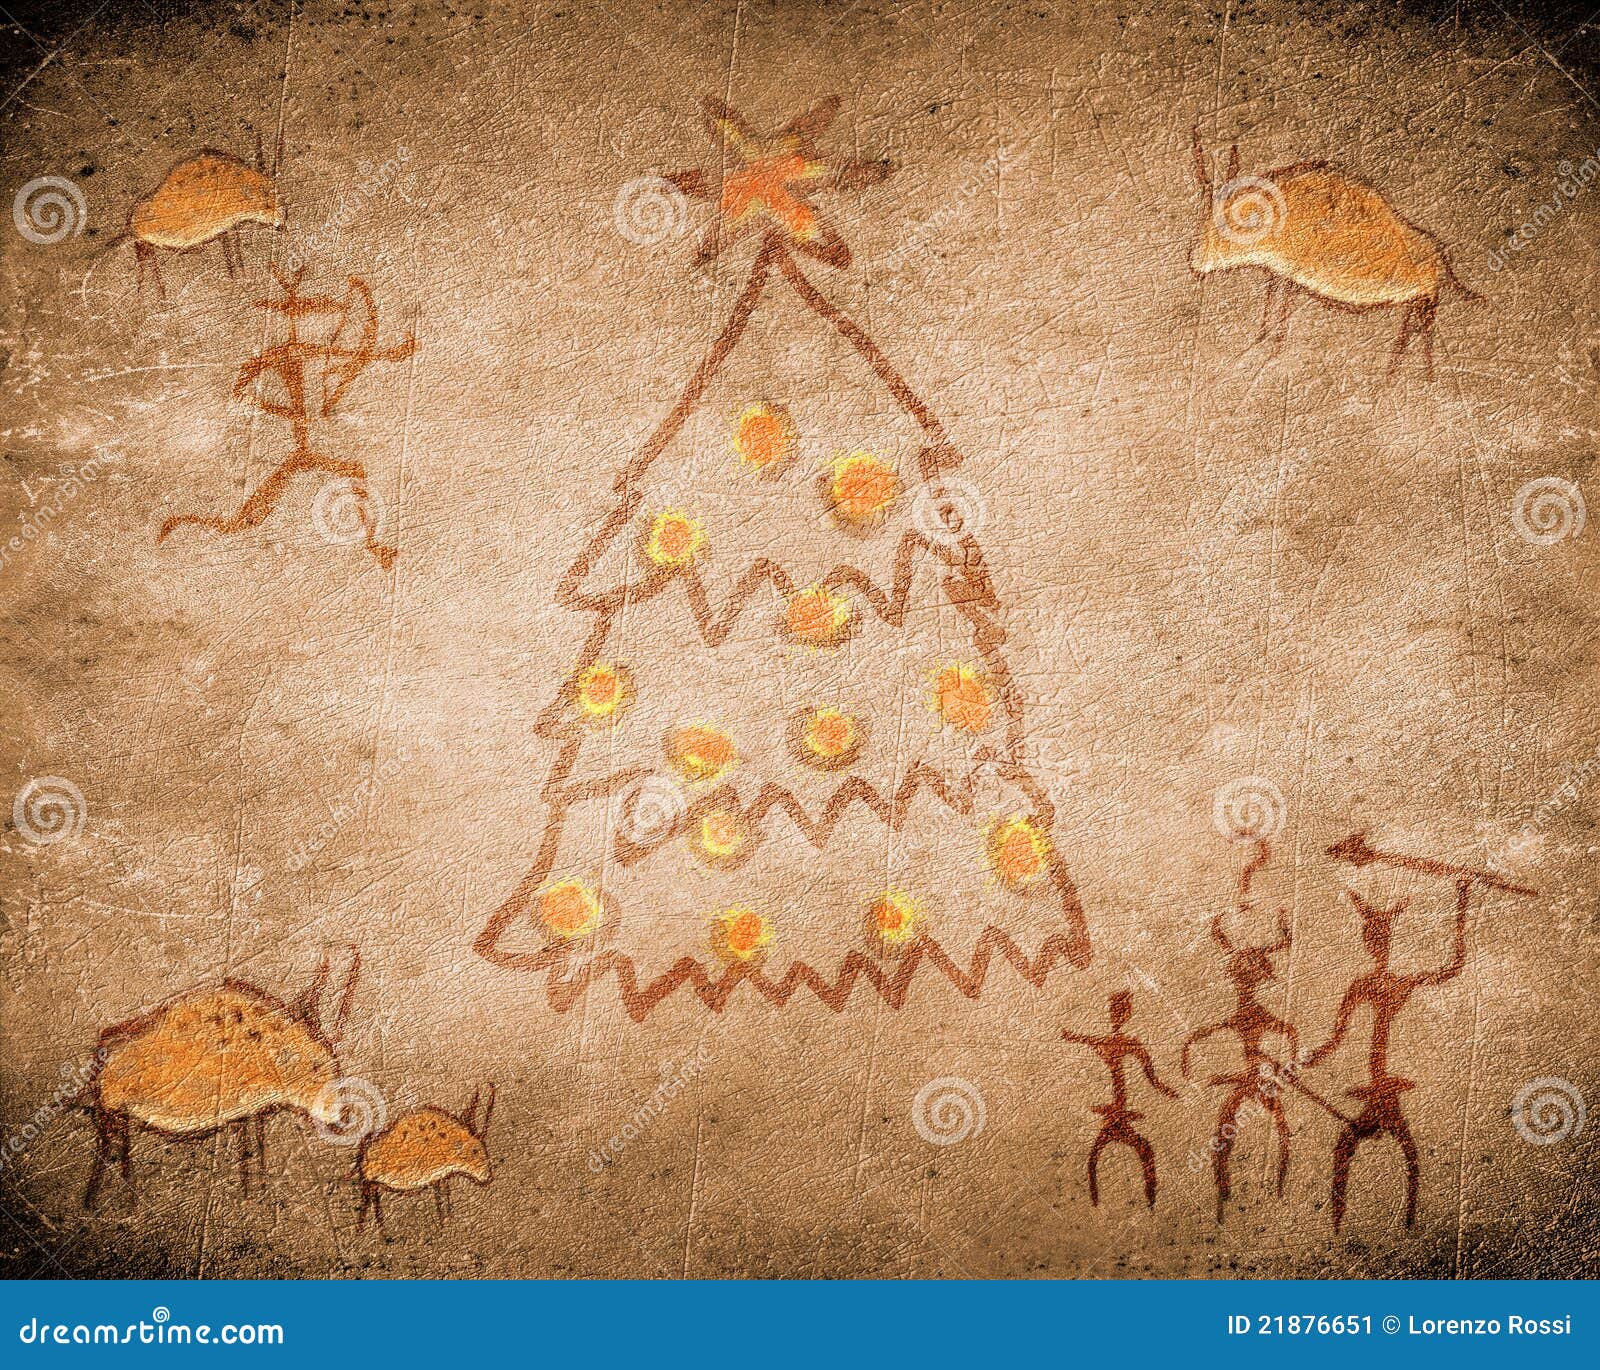 prehistoric-cave-painting-christmas-tree-21876651.jpg